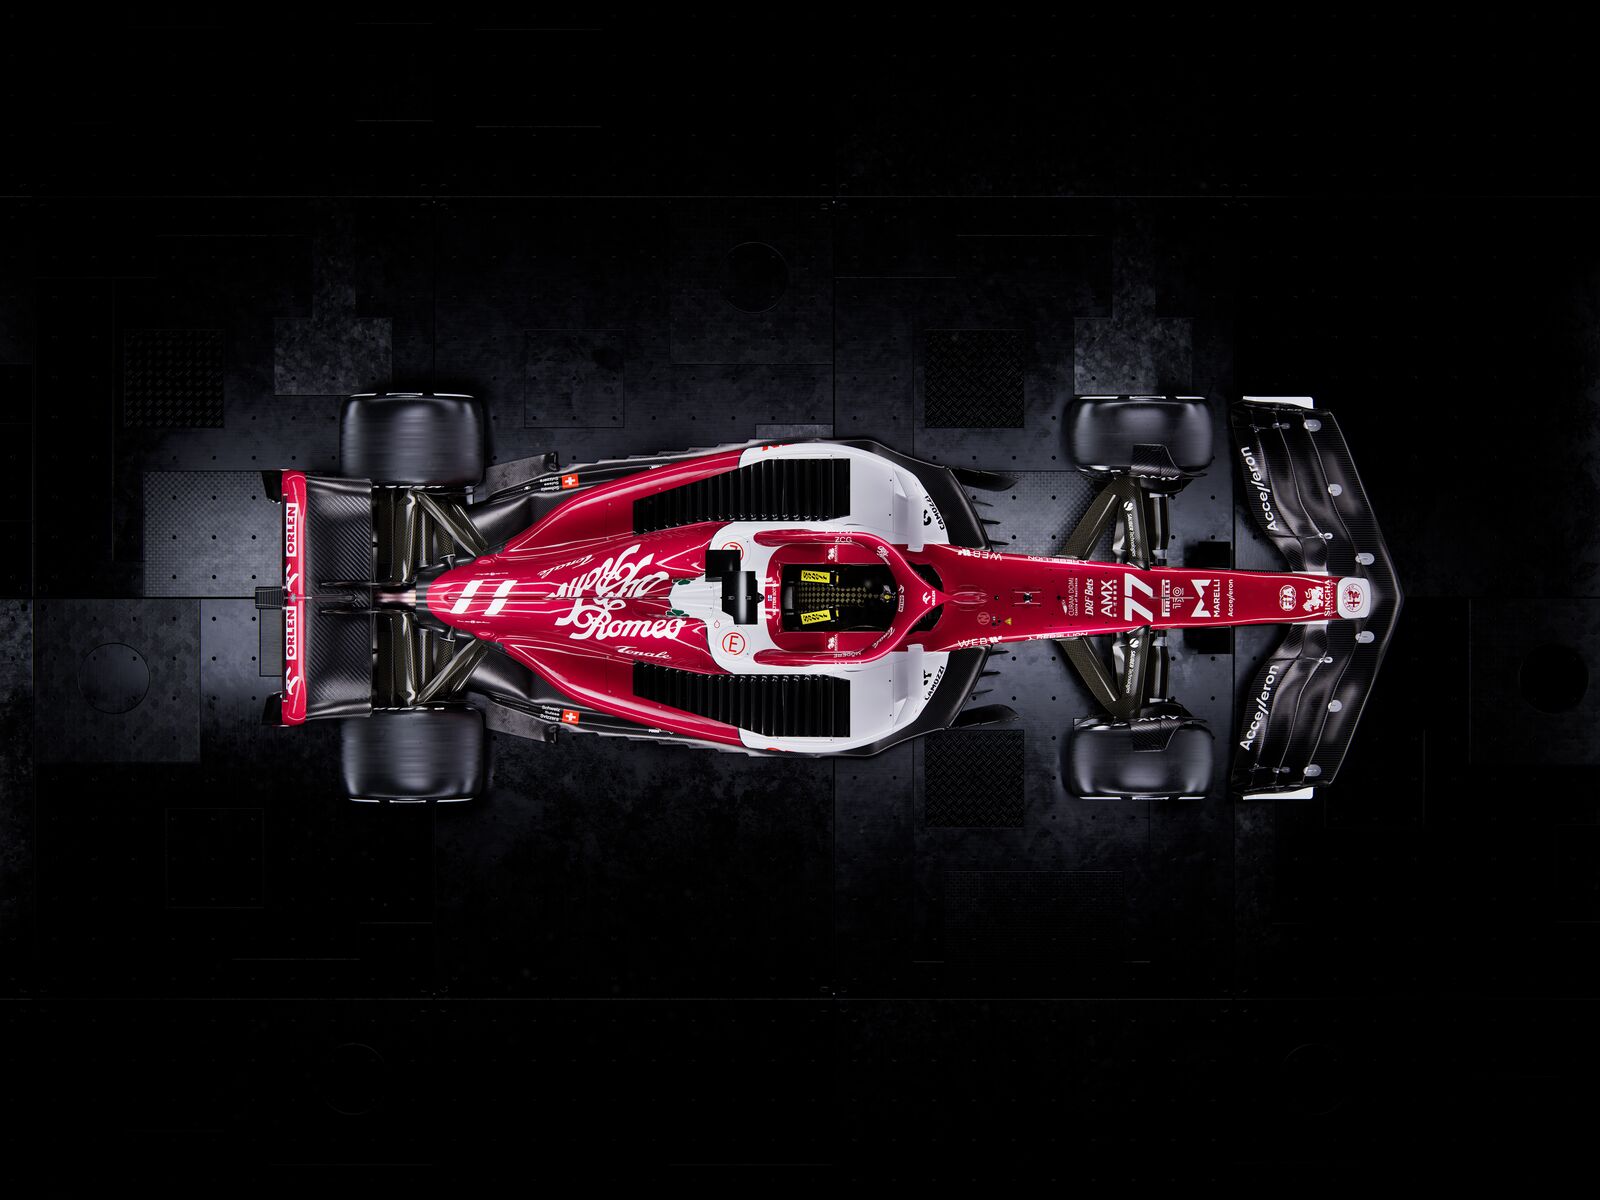 F1 : Alfa Roméo présente la C42